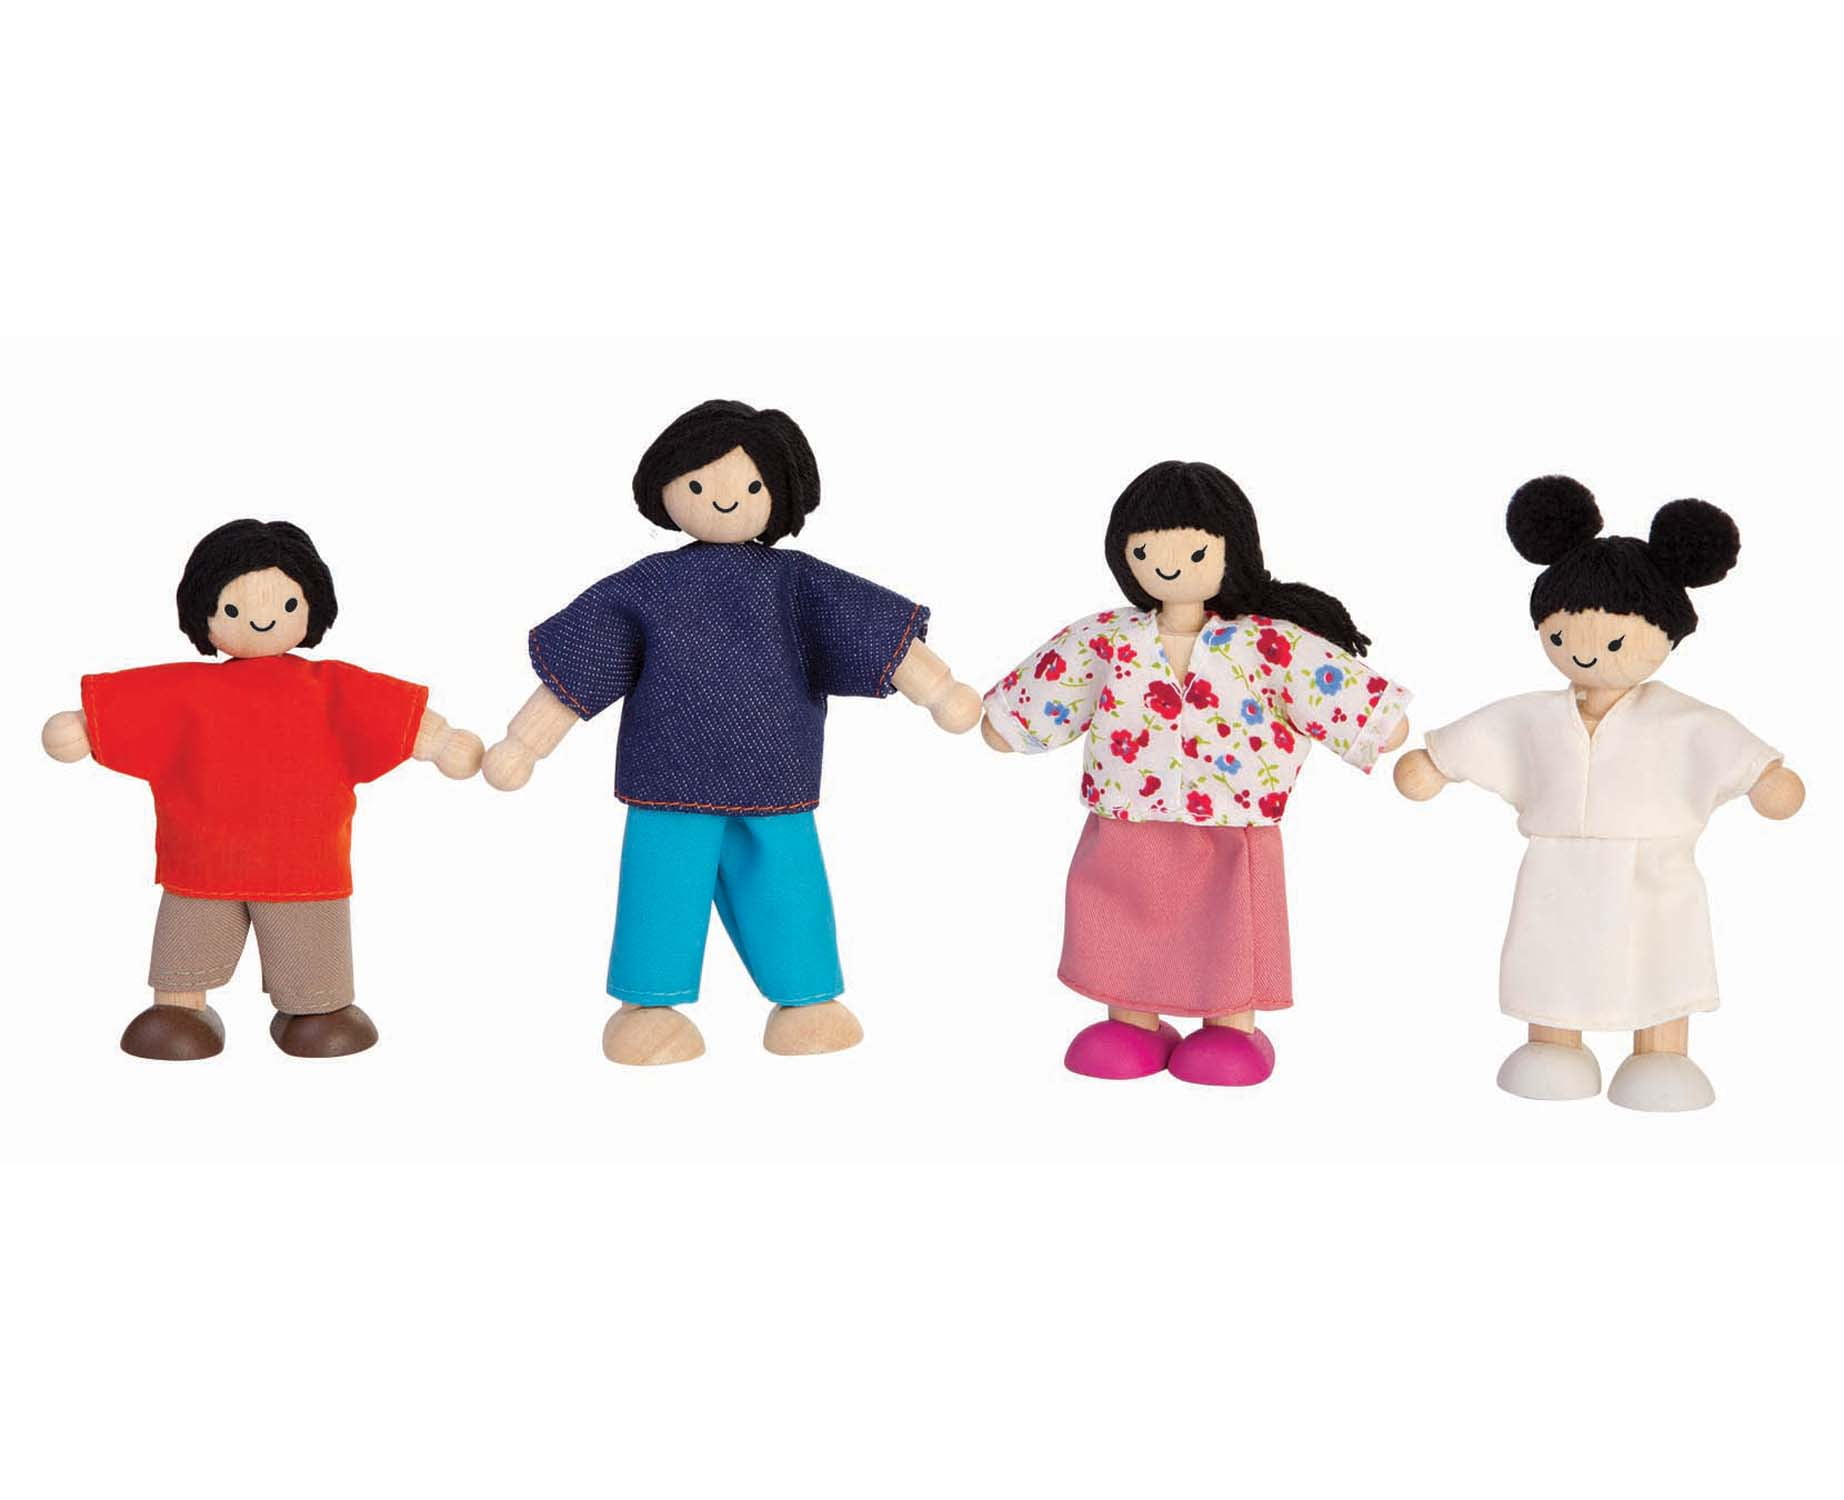 dad & 2 boys NEW mum Playmobil Asian/ethnic dollshouse family figures 